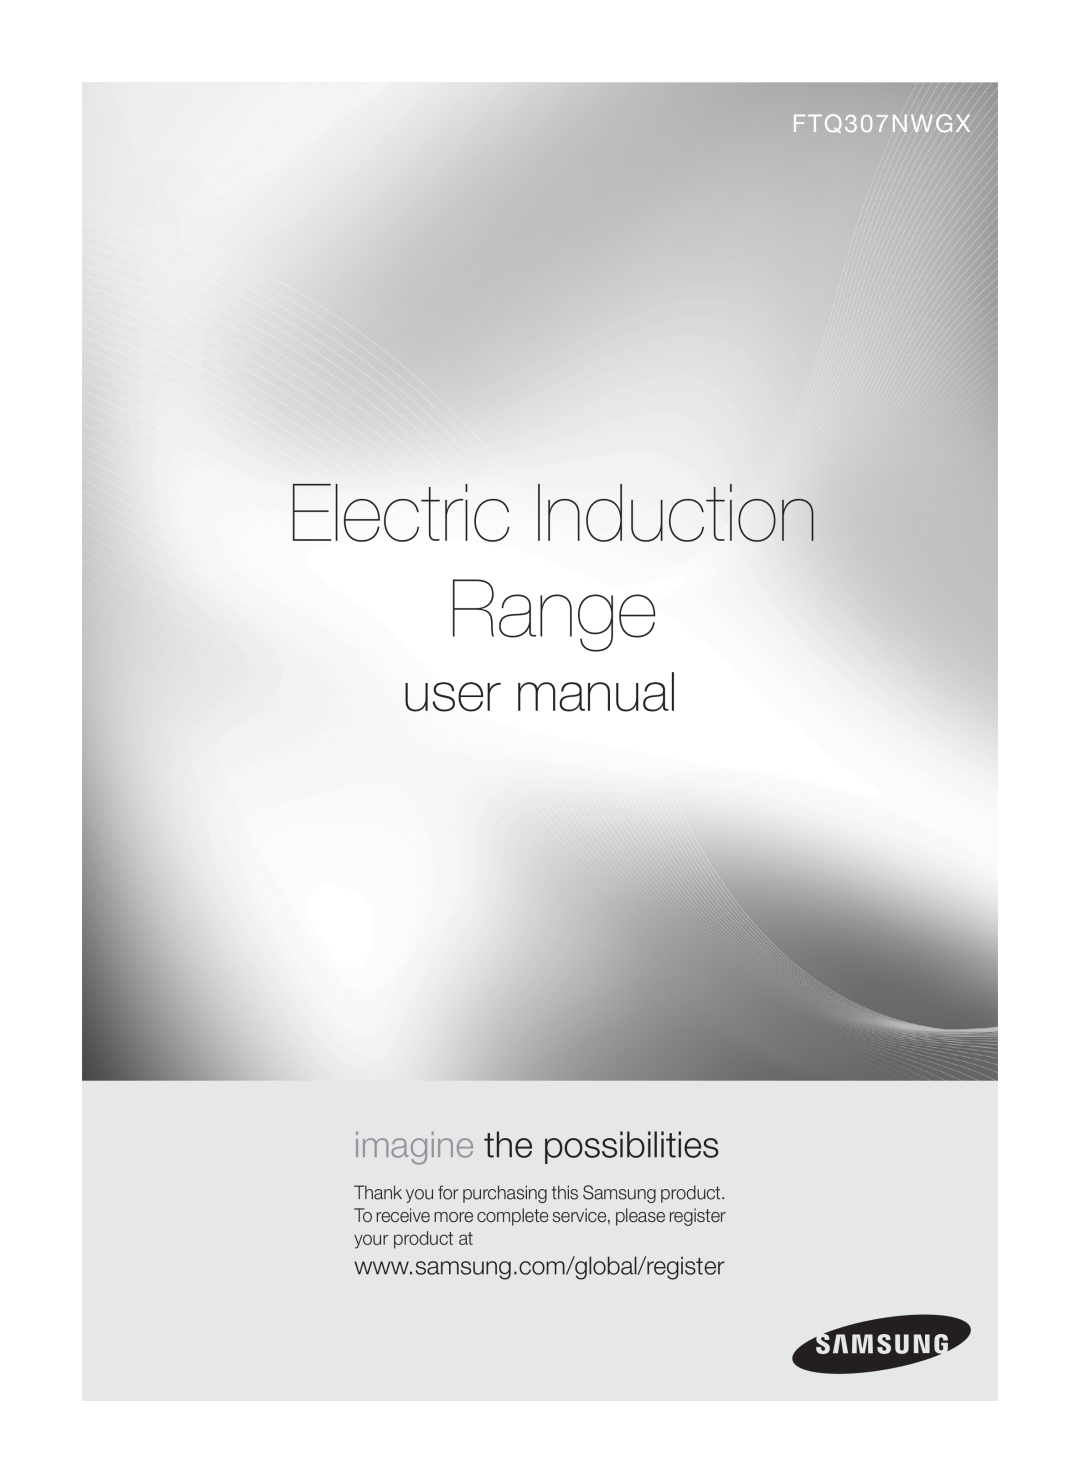 Samsung FTQ307NWGX user manual Electric Induction Range, imagine the possibilities 